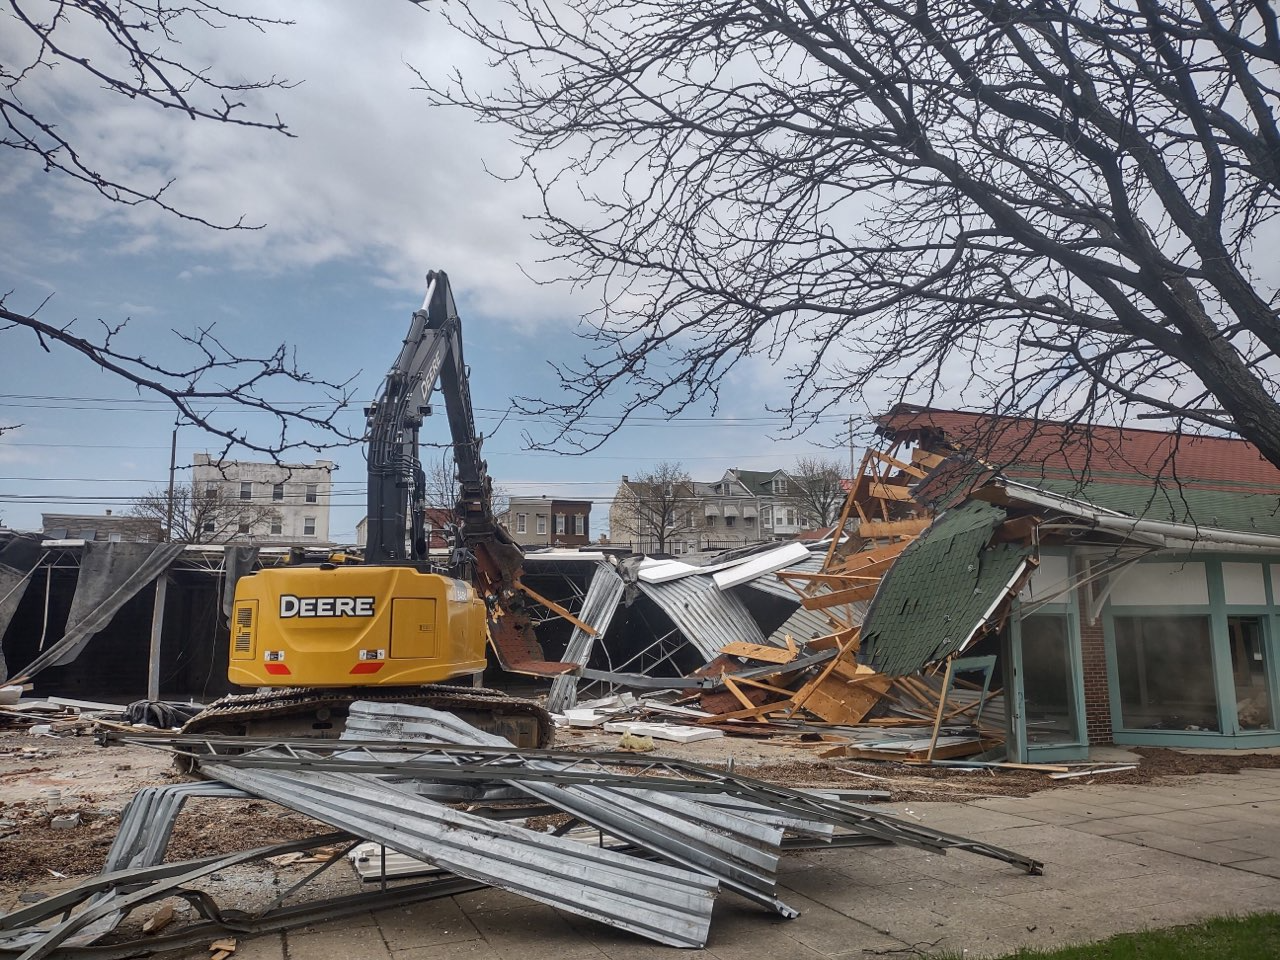 A yellow deere excavator is demolishing a building